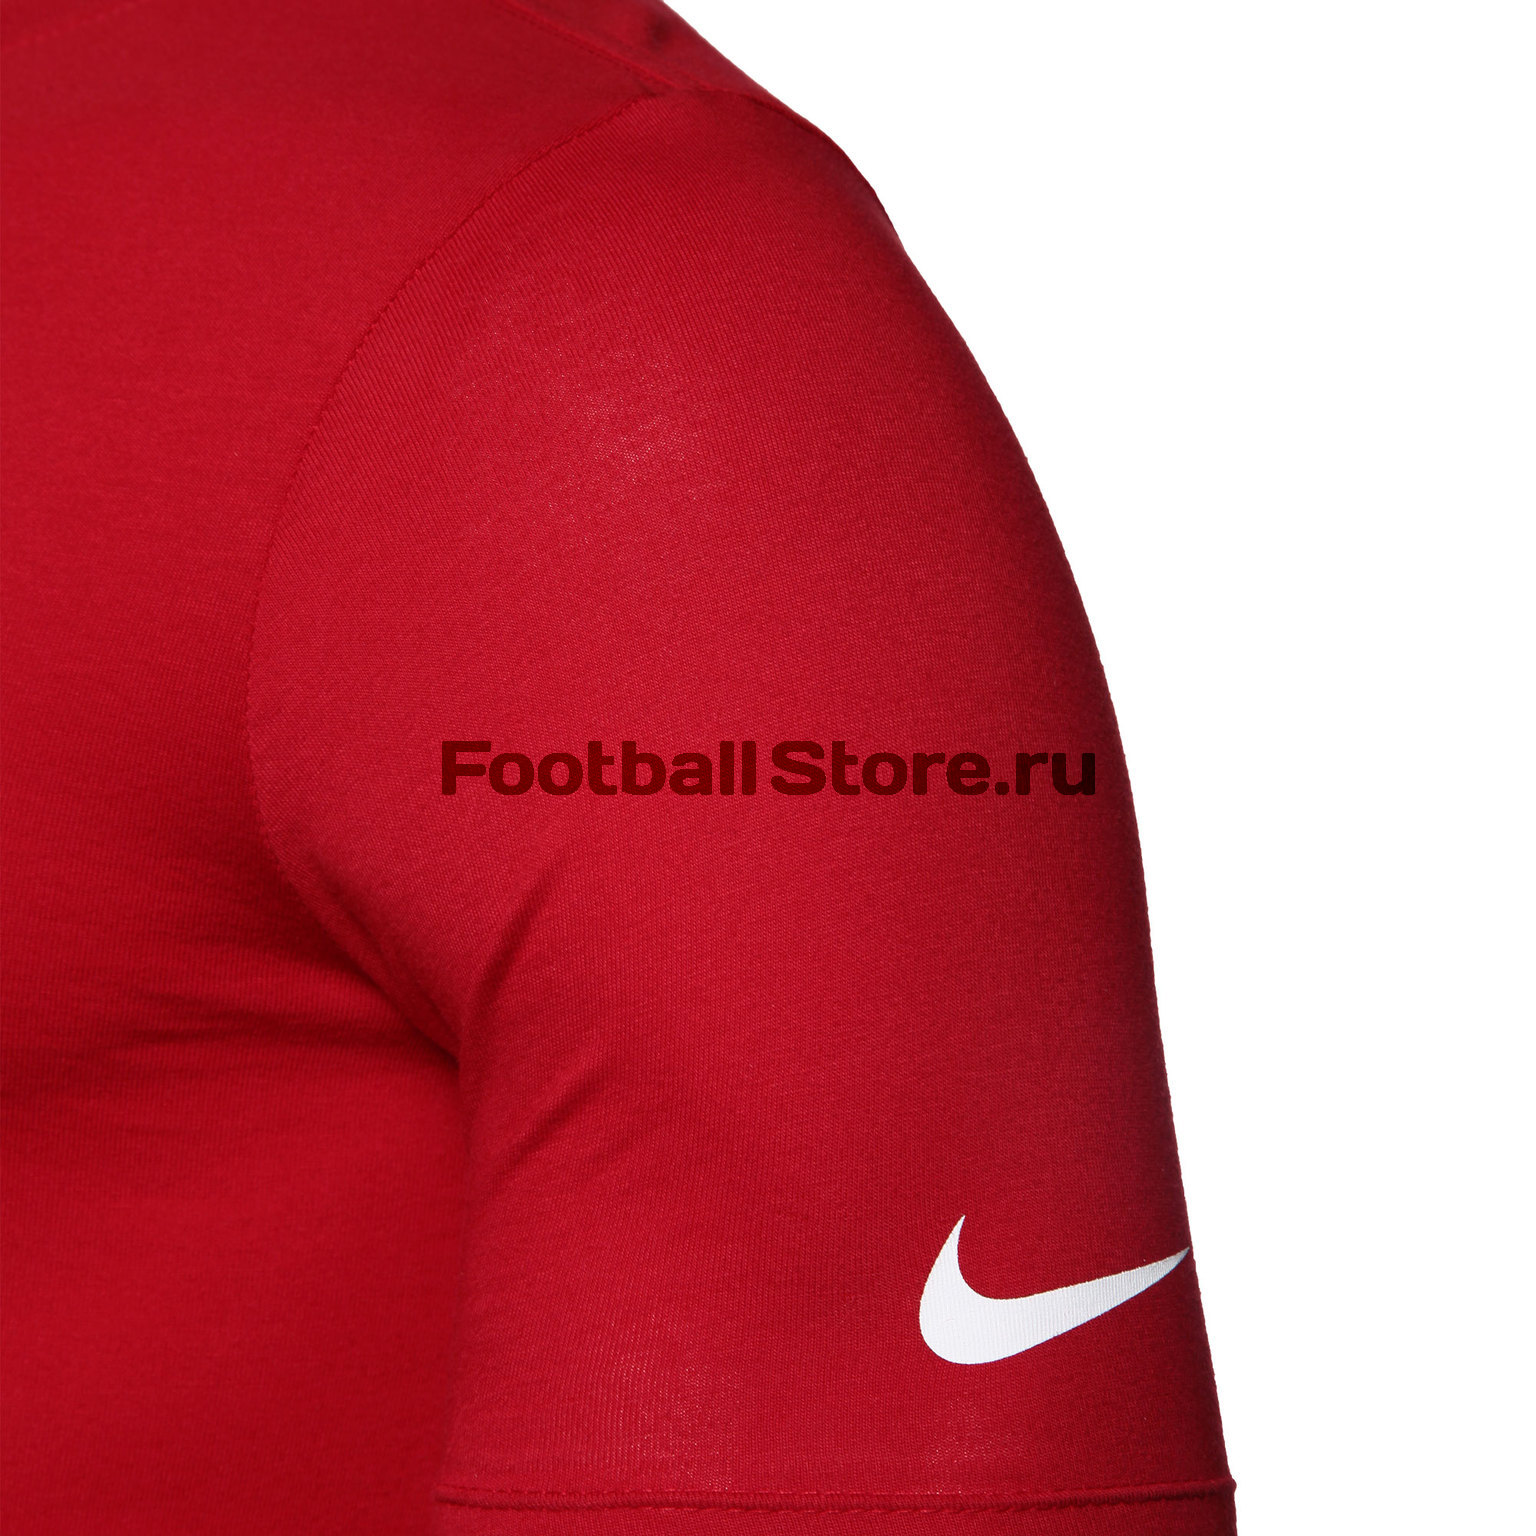 Футболка Nike сборной Португалии 909843-687